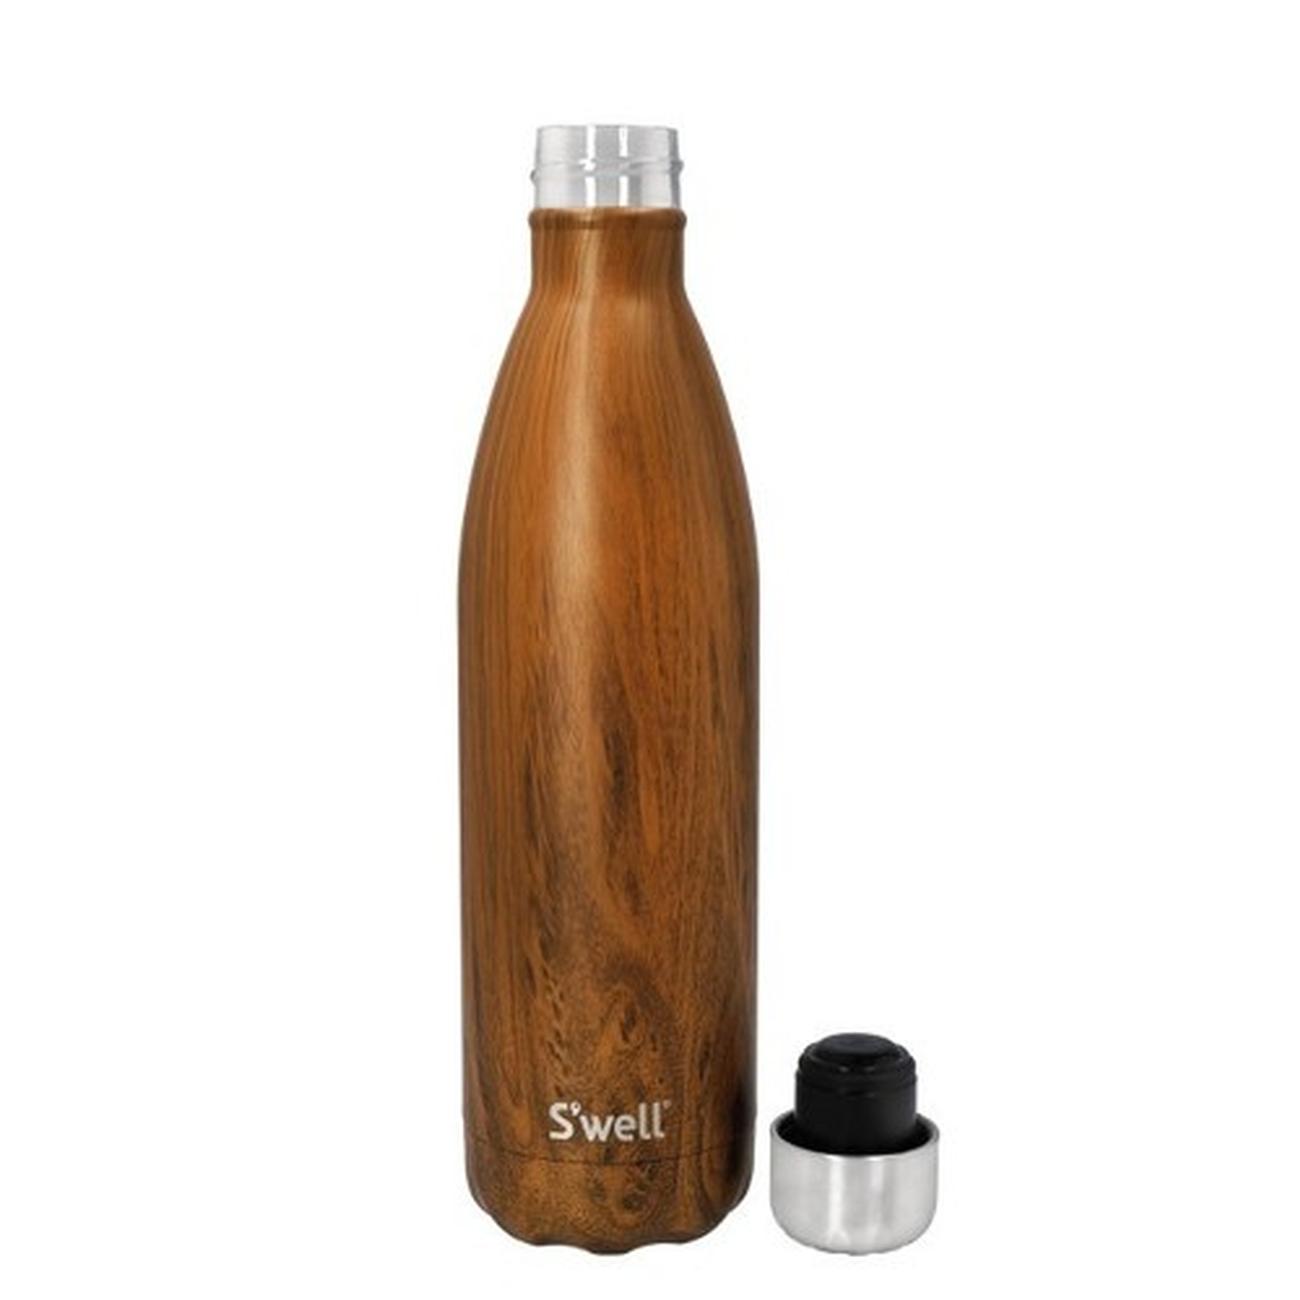 swell-teakwood-bottle-750ml - S'well Teakwood Bottle 750ml